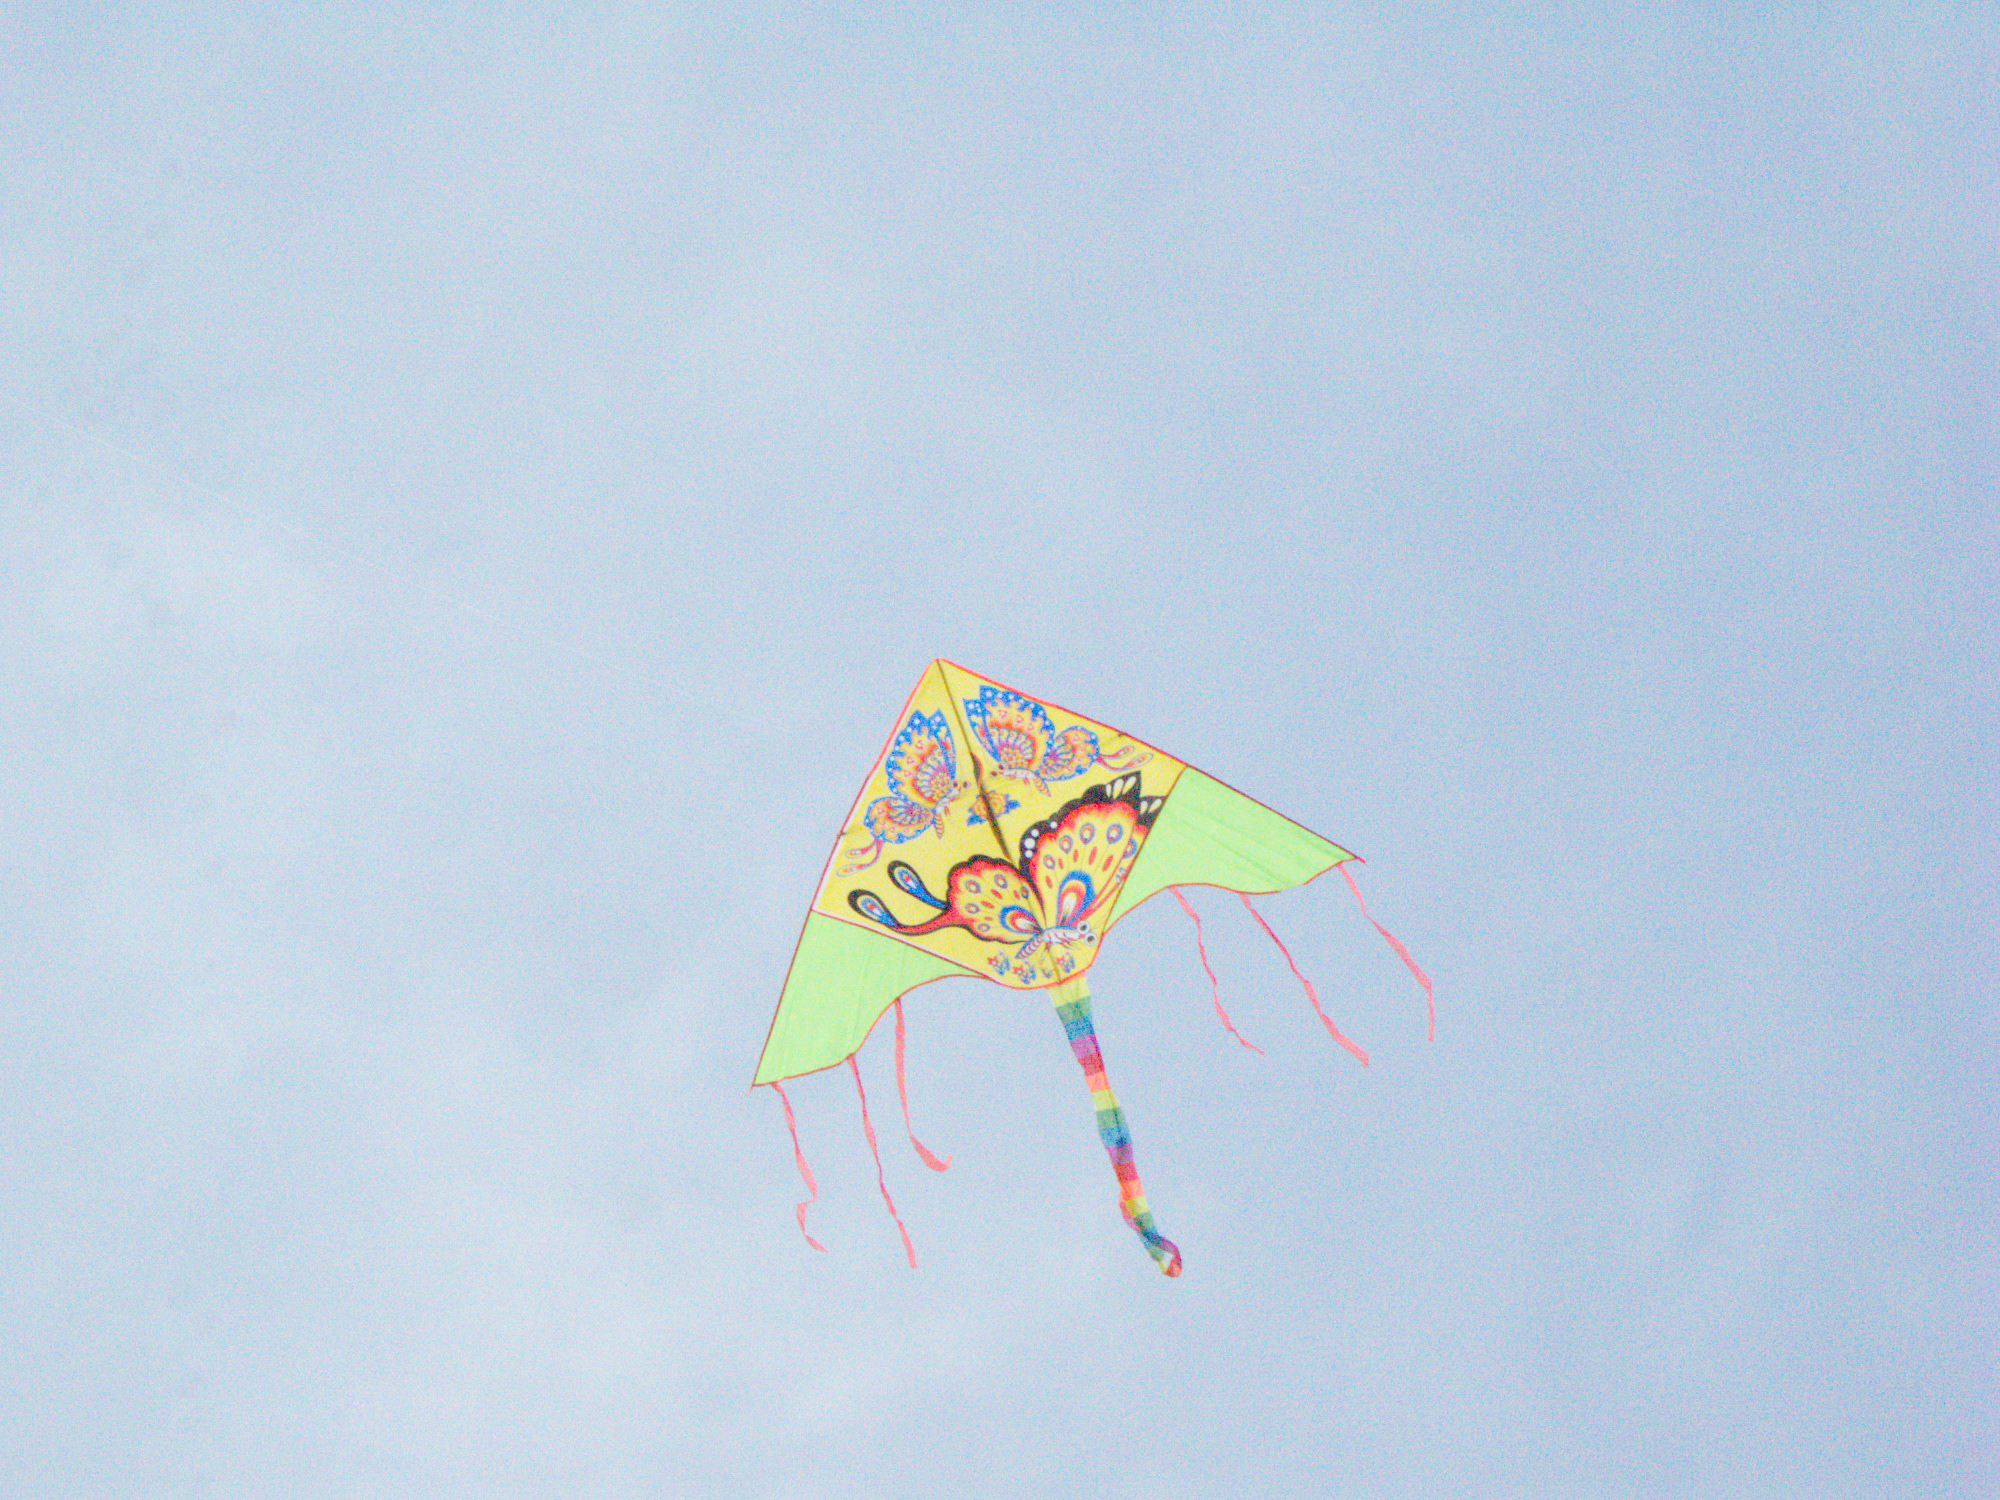 Mongolian kite